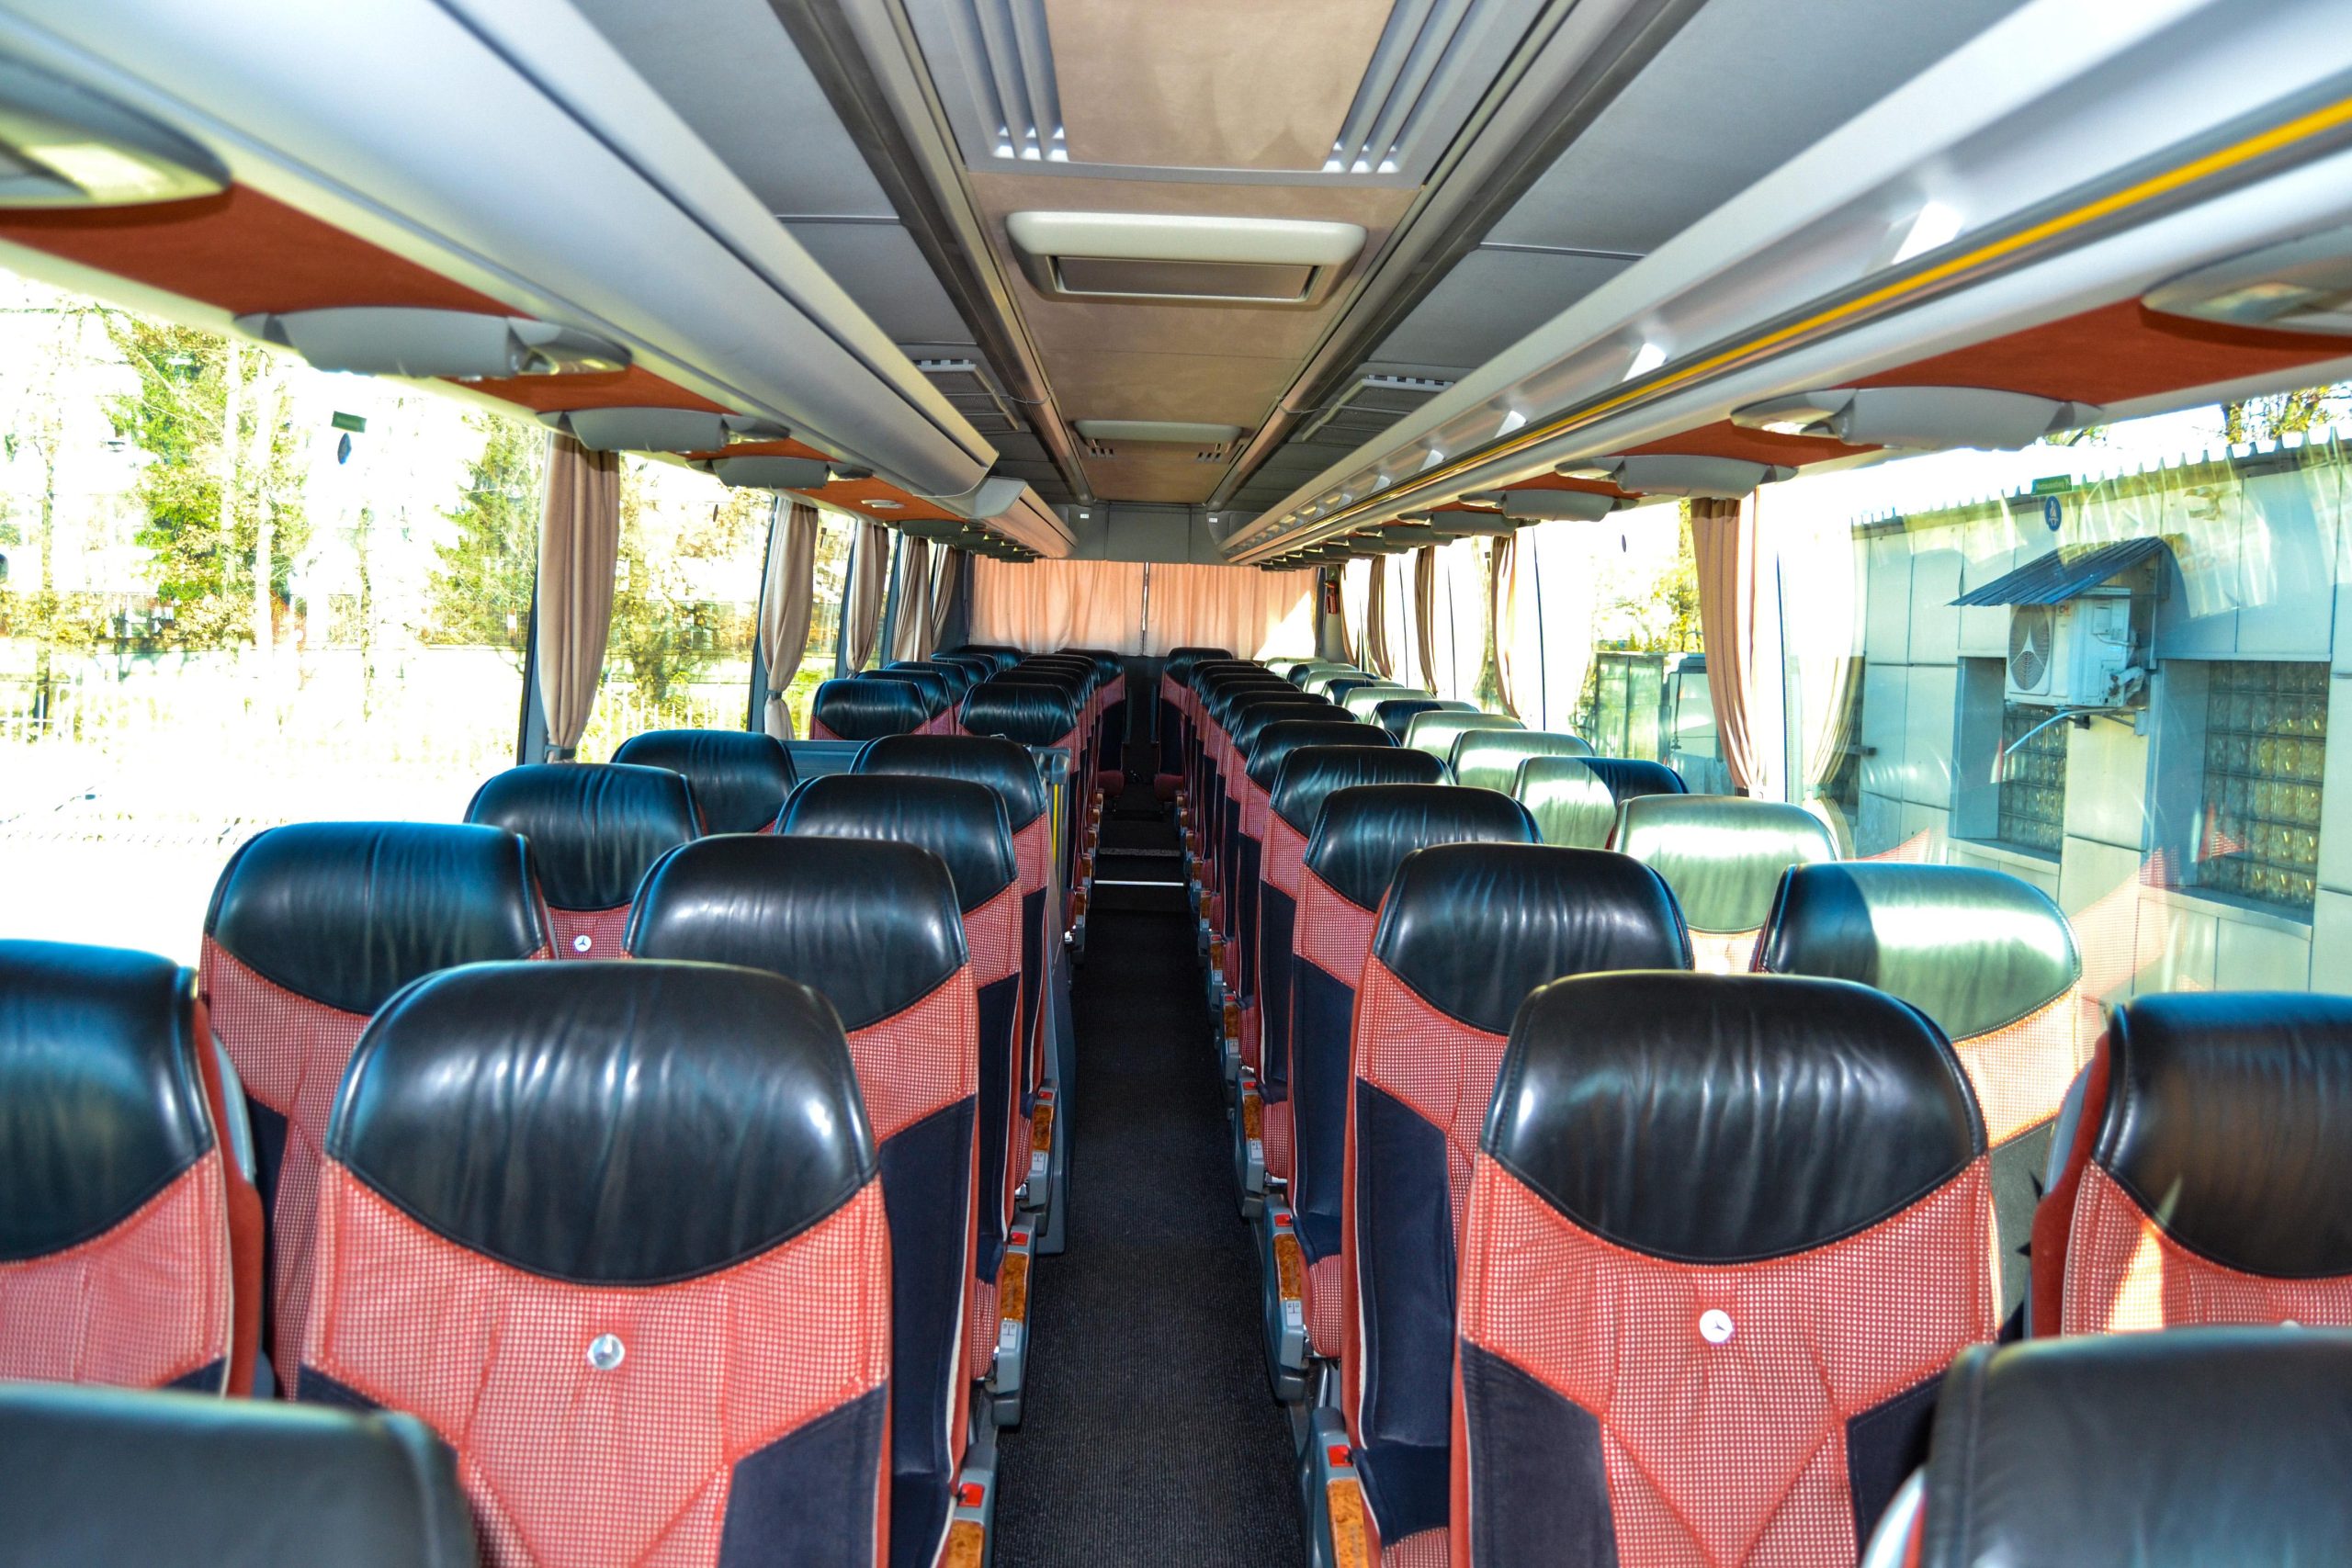 Автобус MERCEDES-BENZ TRAVEGO 2012 год 48+2 места